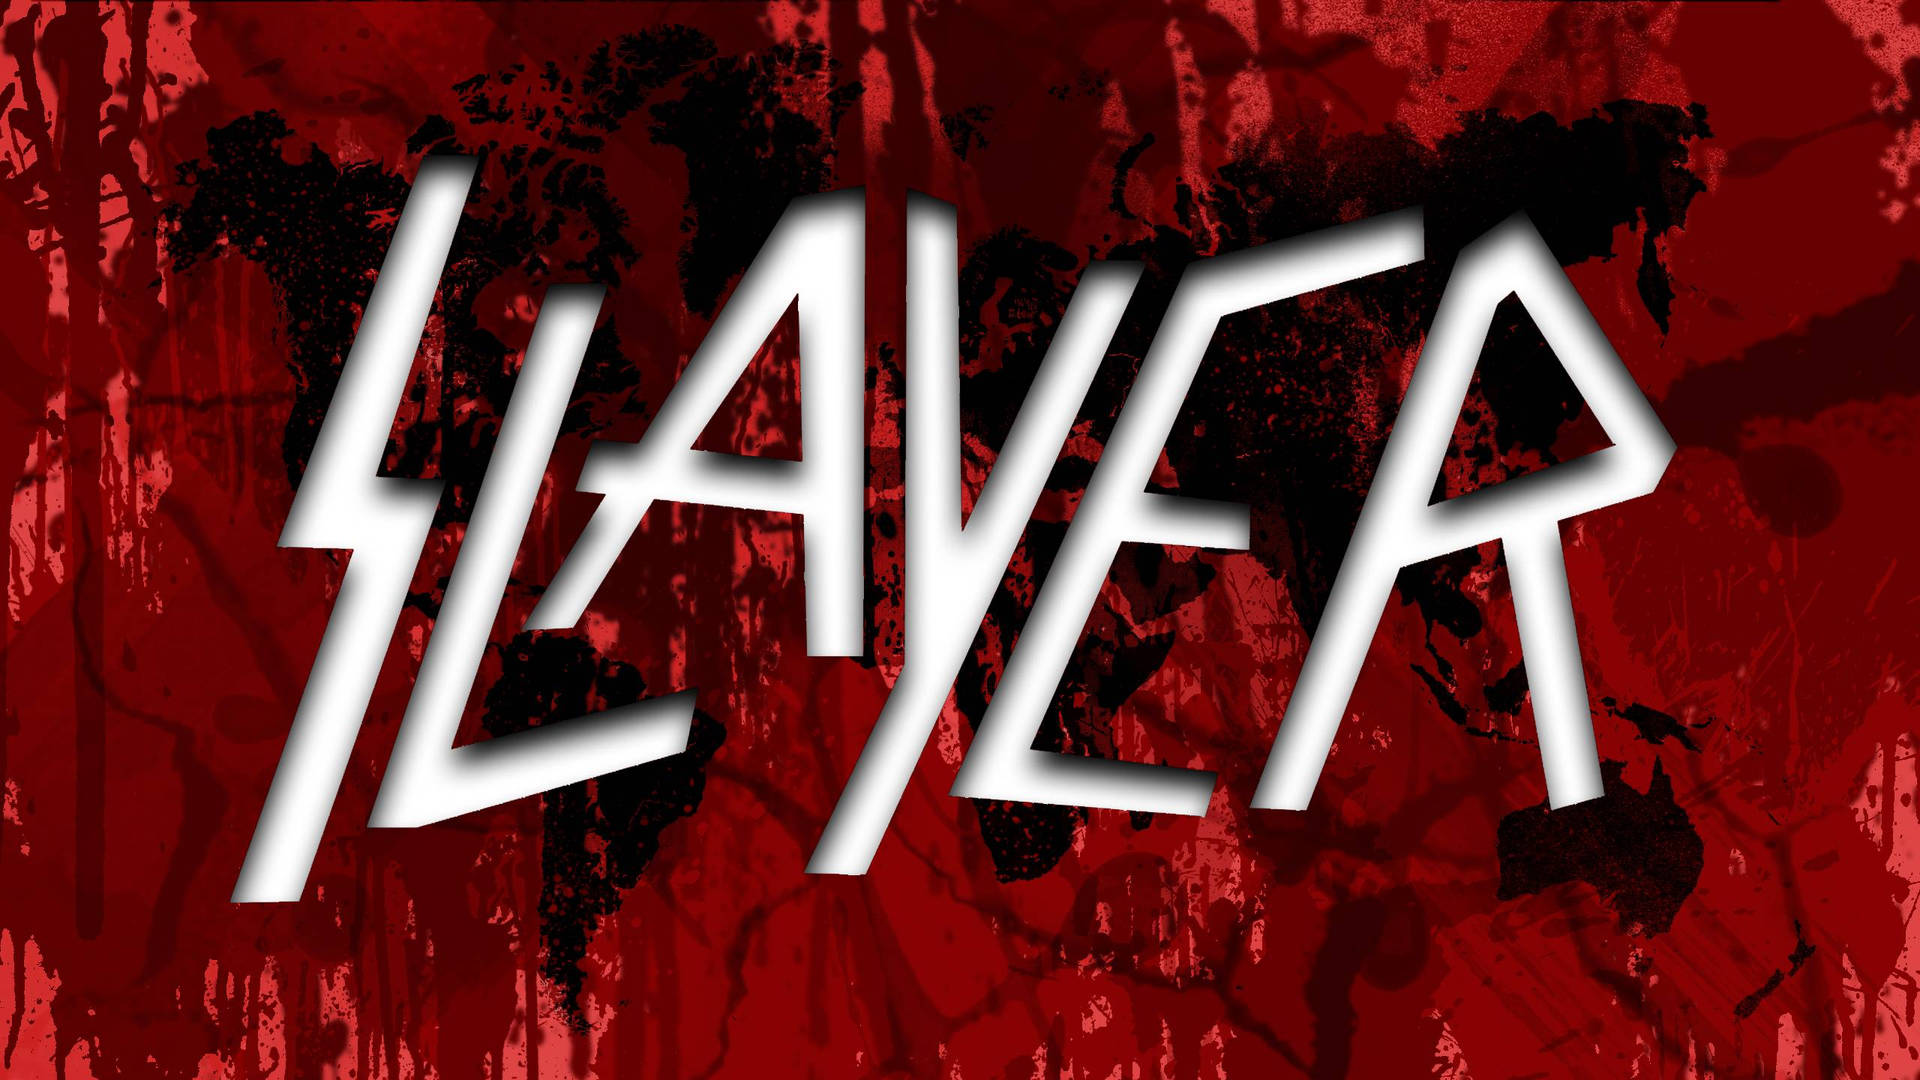 Red Slayer Artwork Background